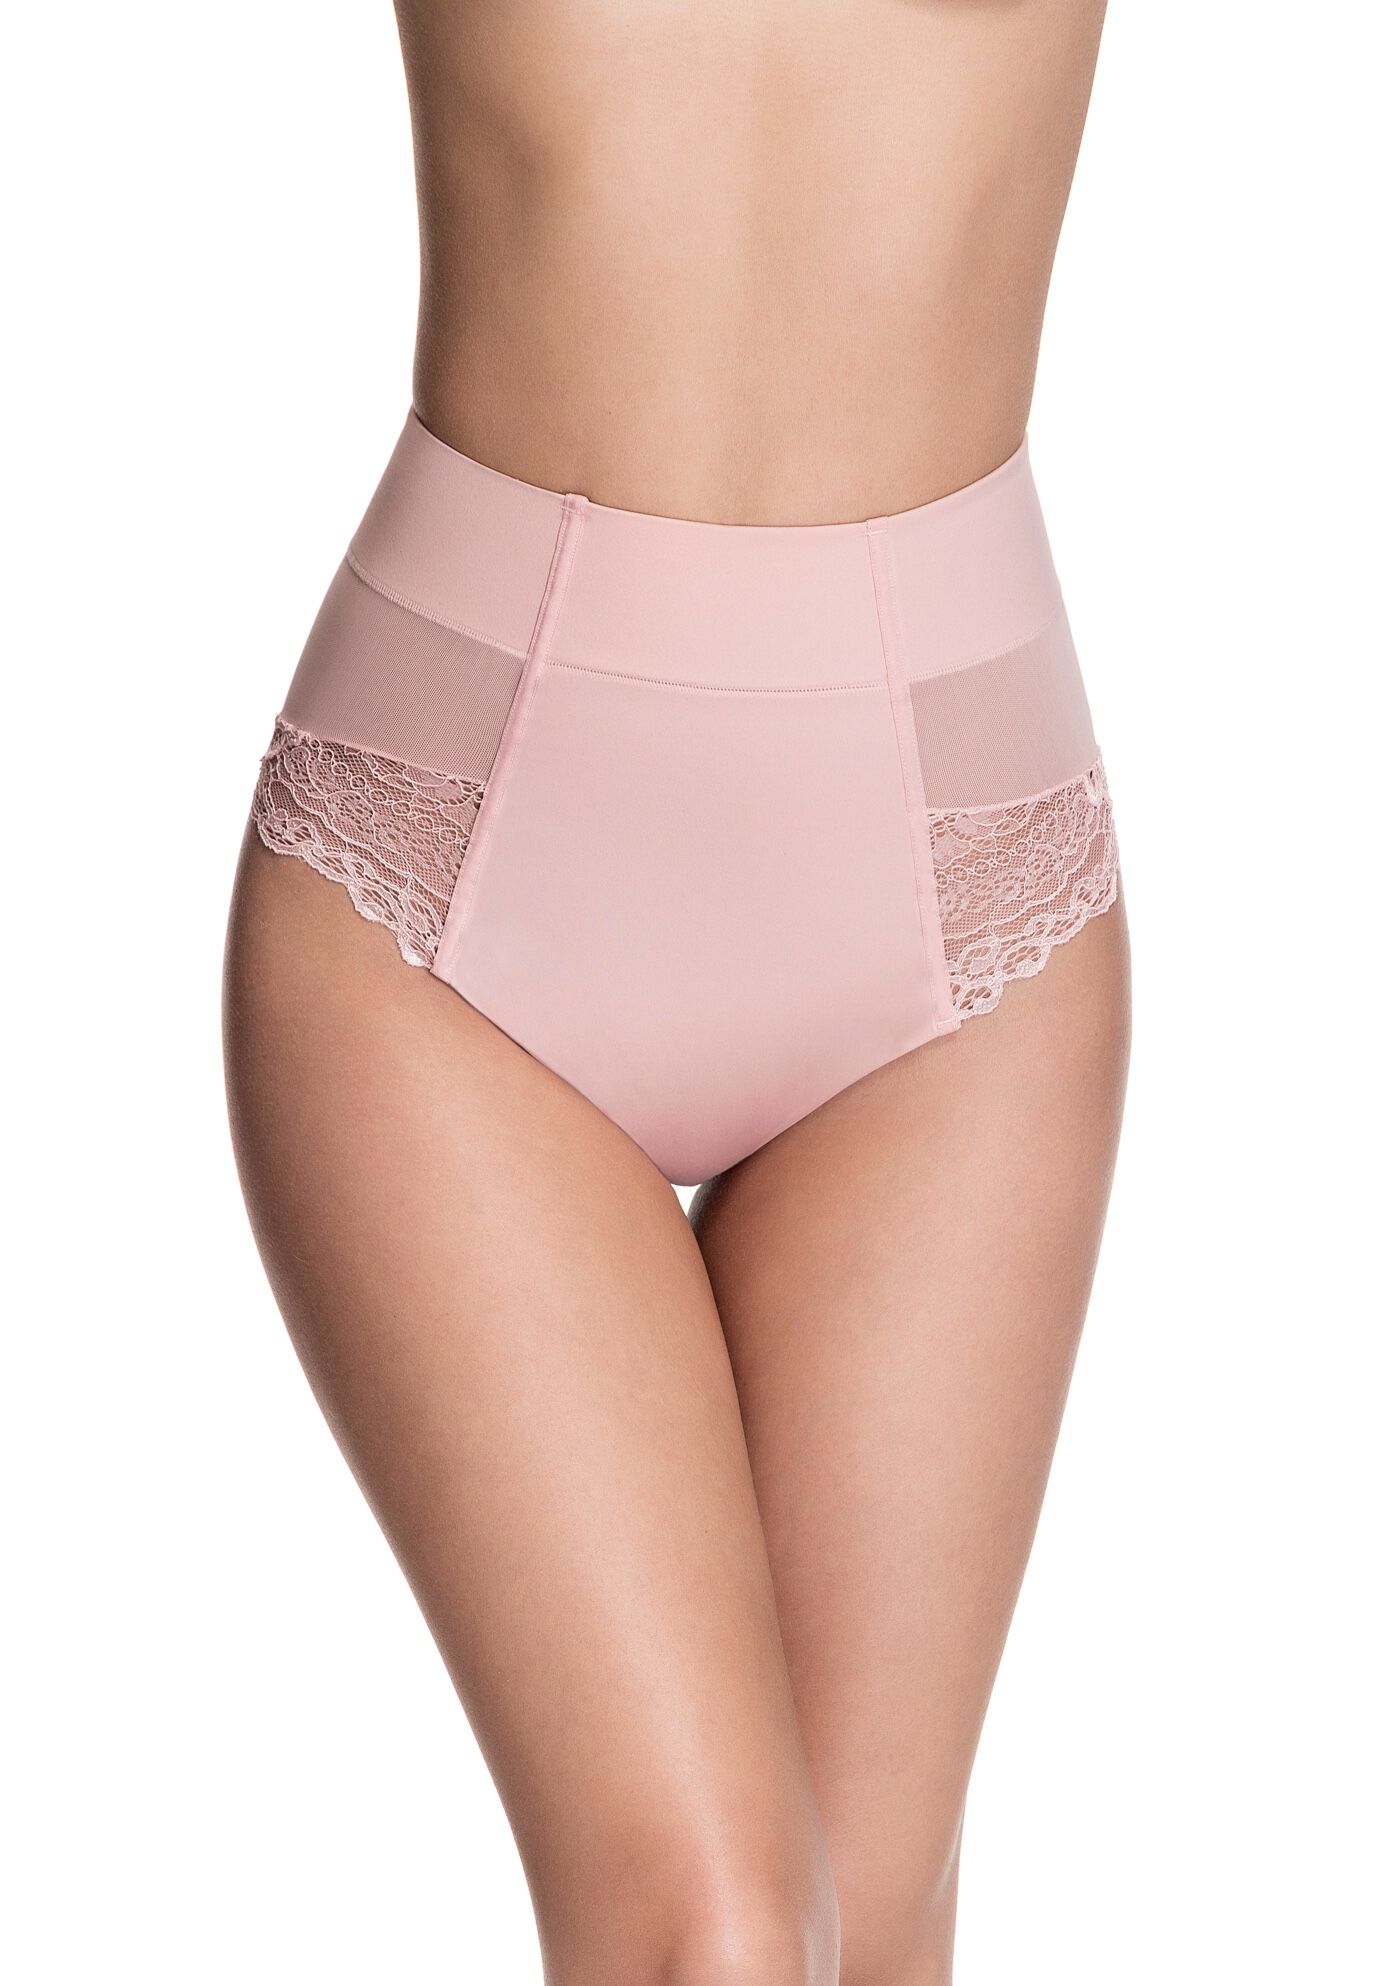 Plus Size Women's Brazilian Flair Mid Waist Brazilian Panty by Squeem in Summer Blush (Size XS)